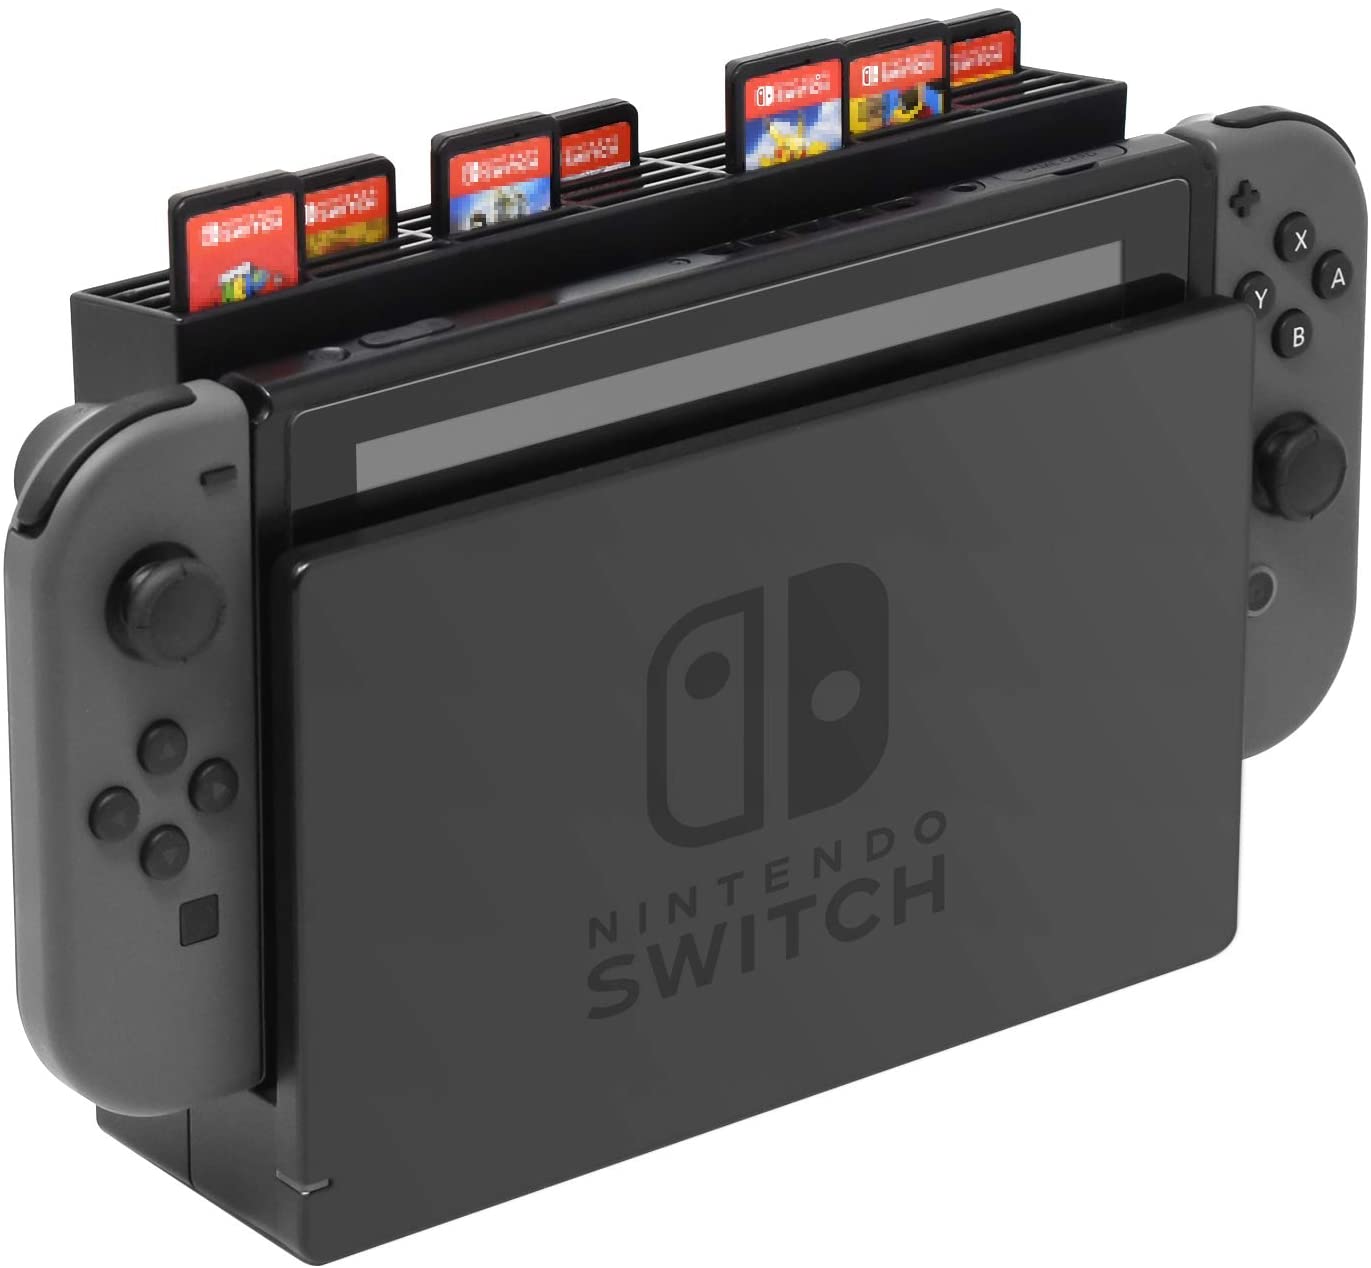 Nintendo Switch Card Storage - GamerPro